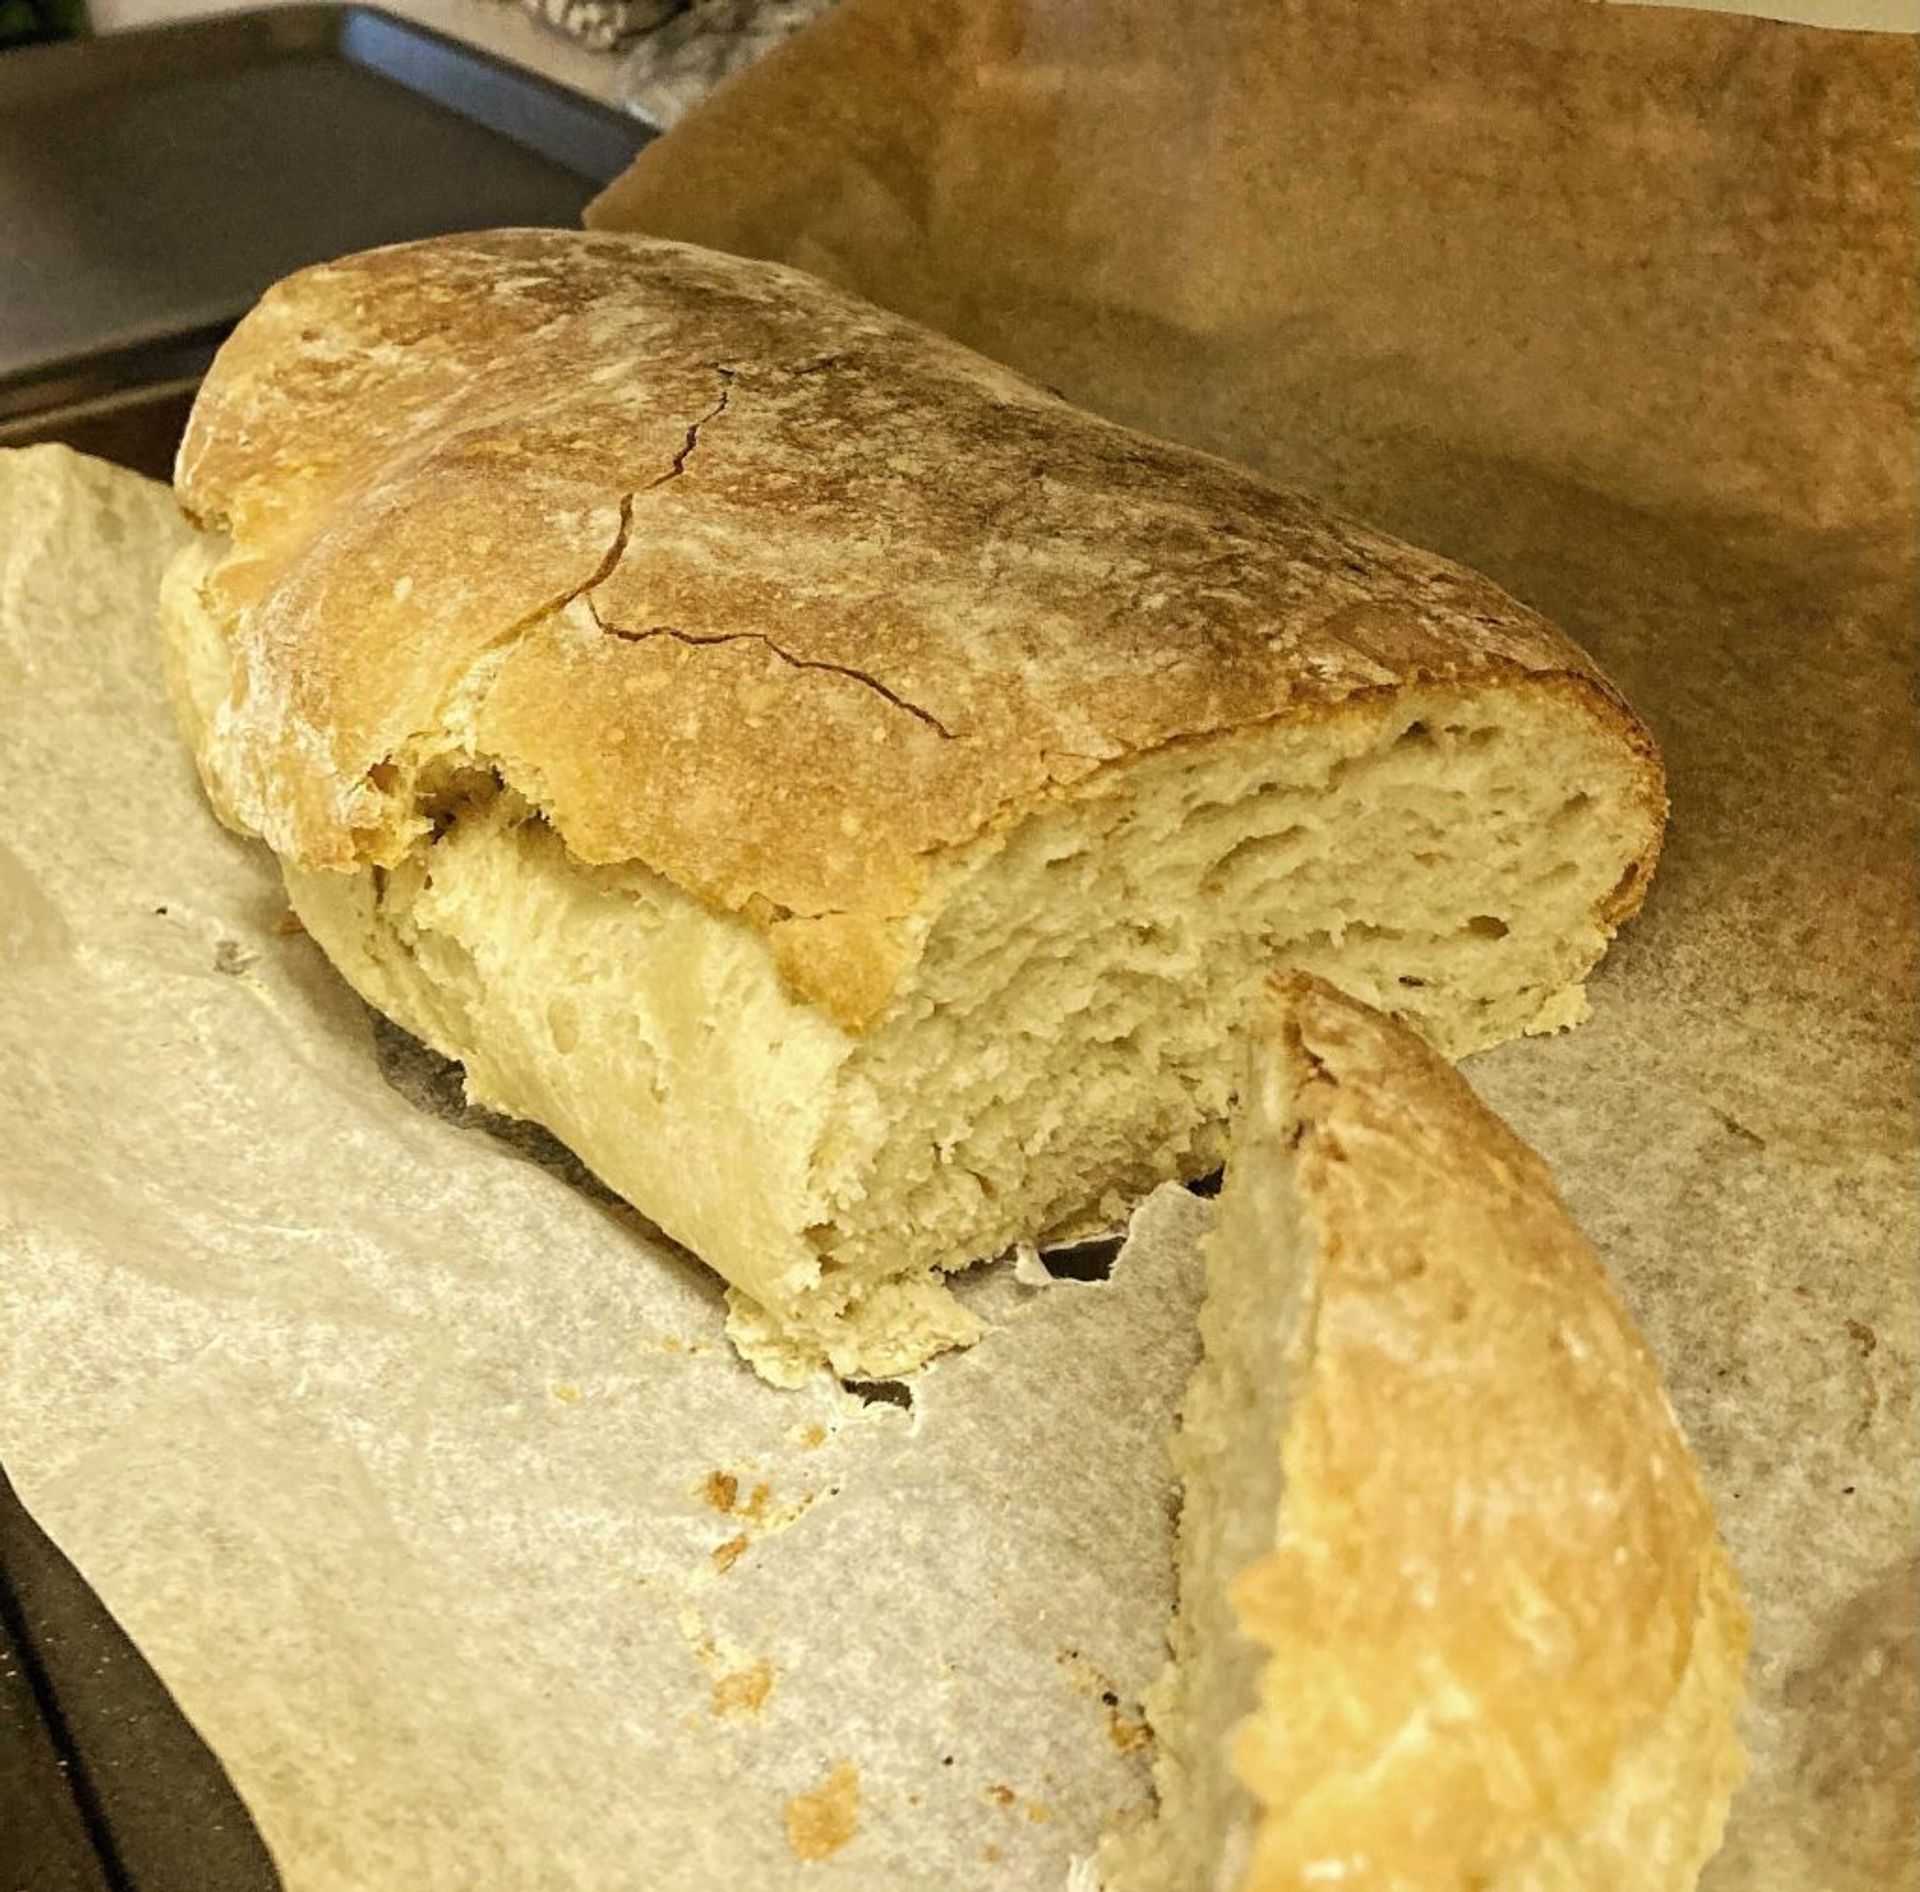 A freshly baked bread.